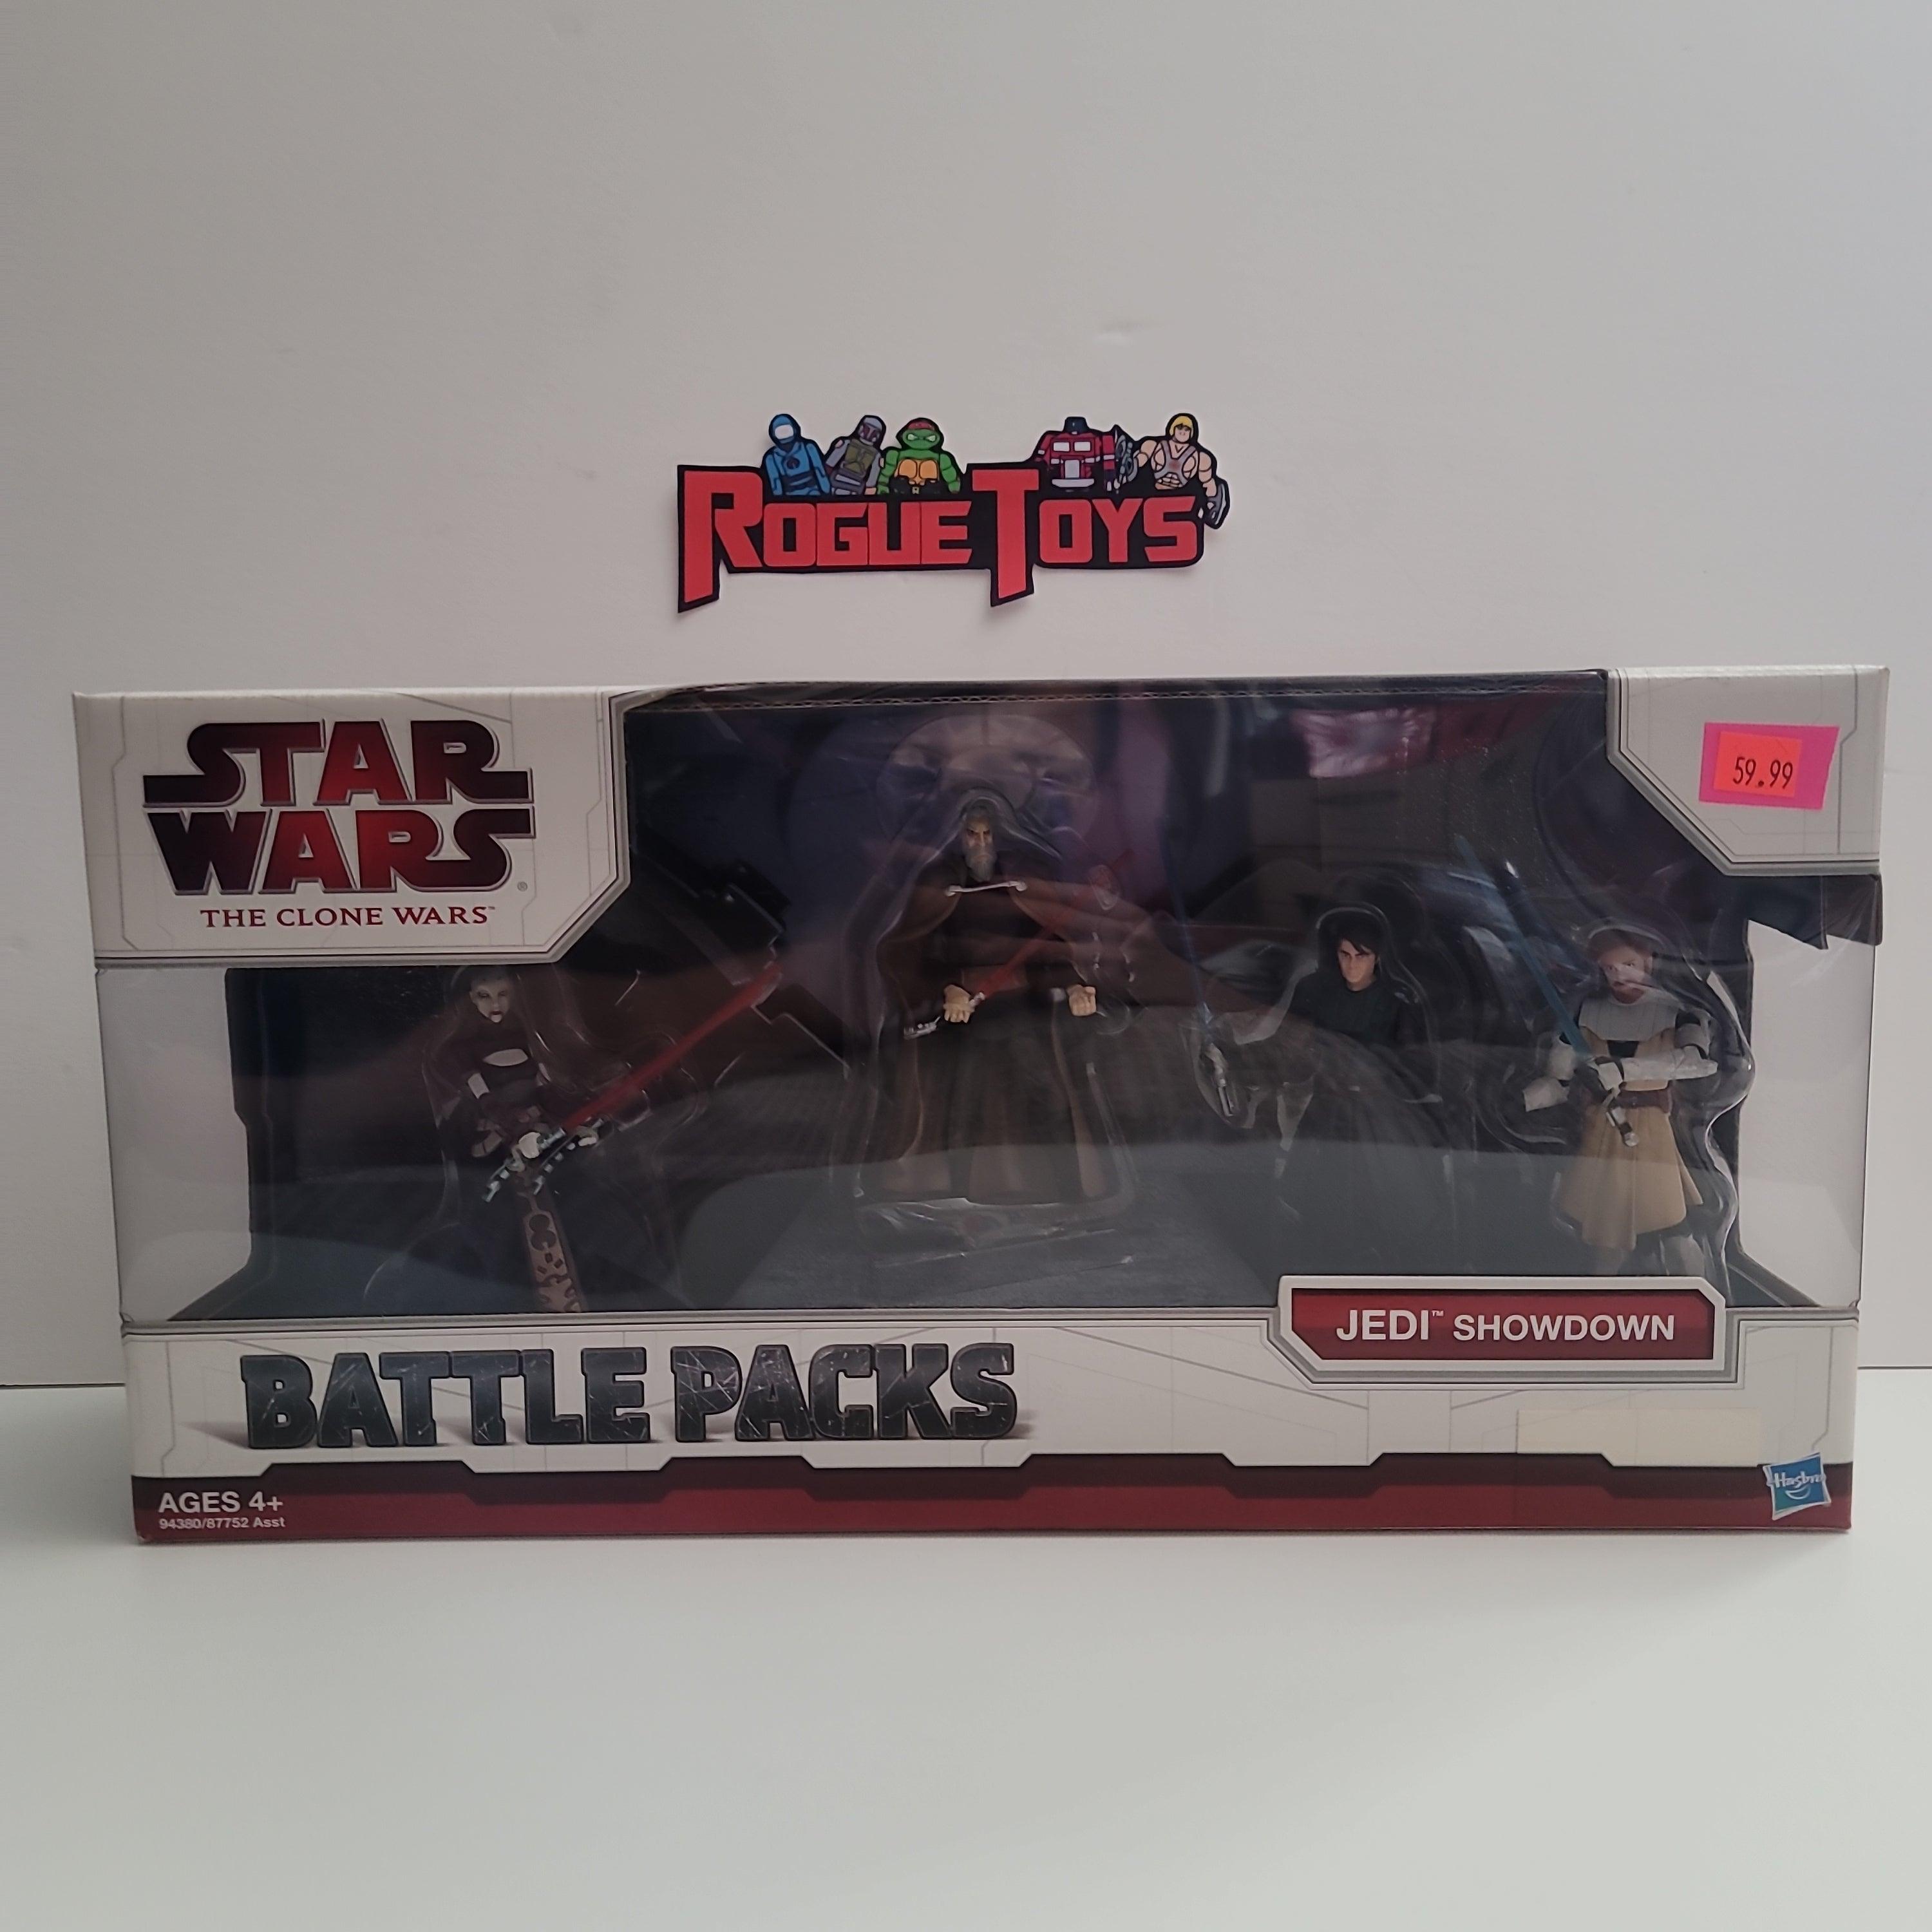 Hasbro Star Wars legacy collection Battle packs Jedi showdown